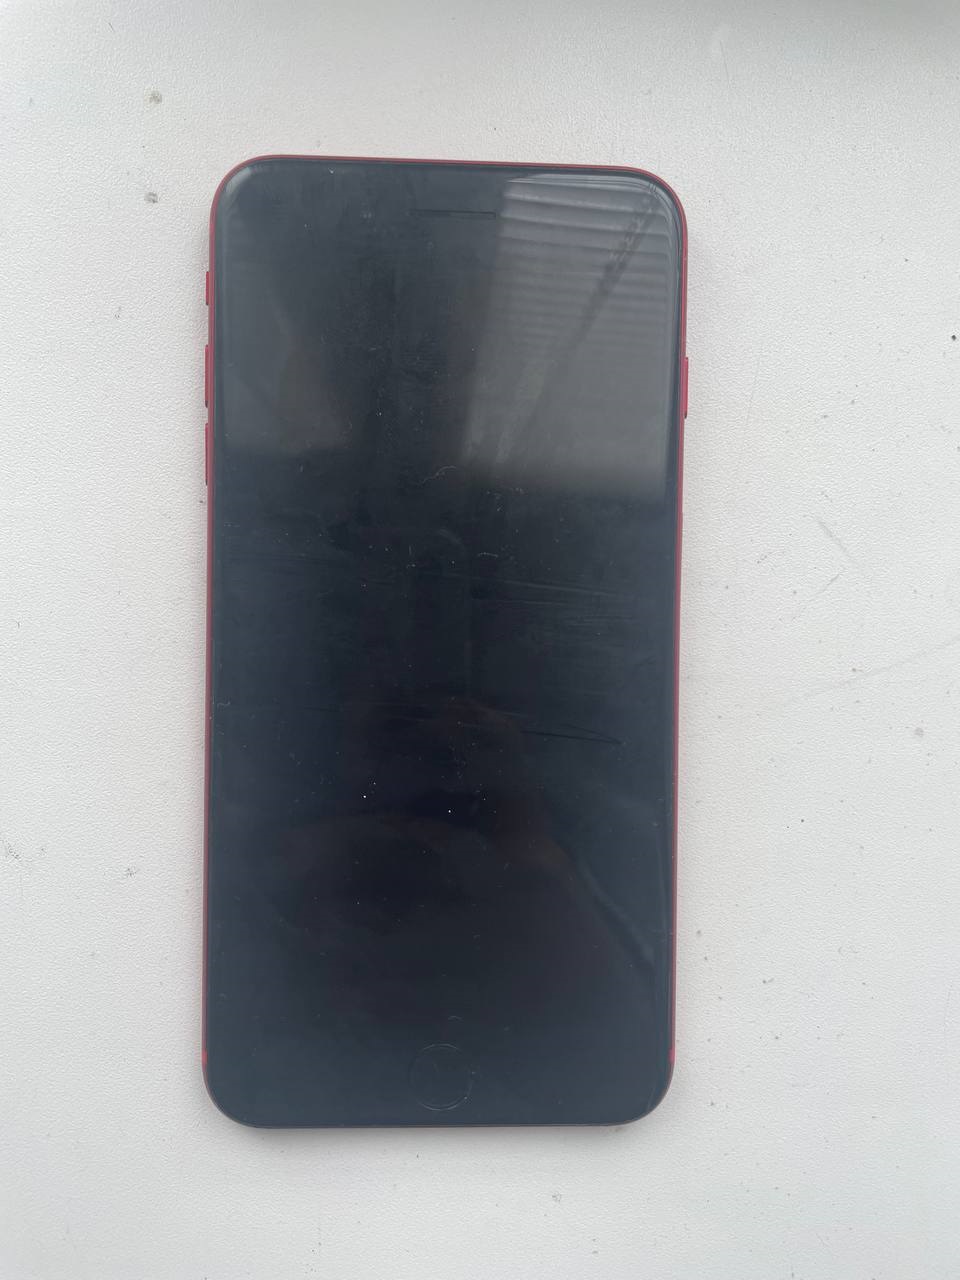 Apple iPhone 8 Plus 64Gb Product Red (MRT72) 0